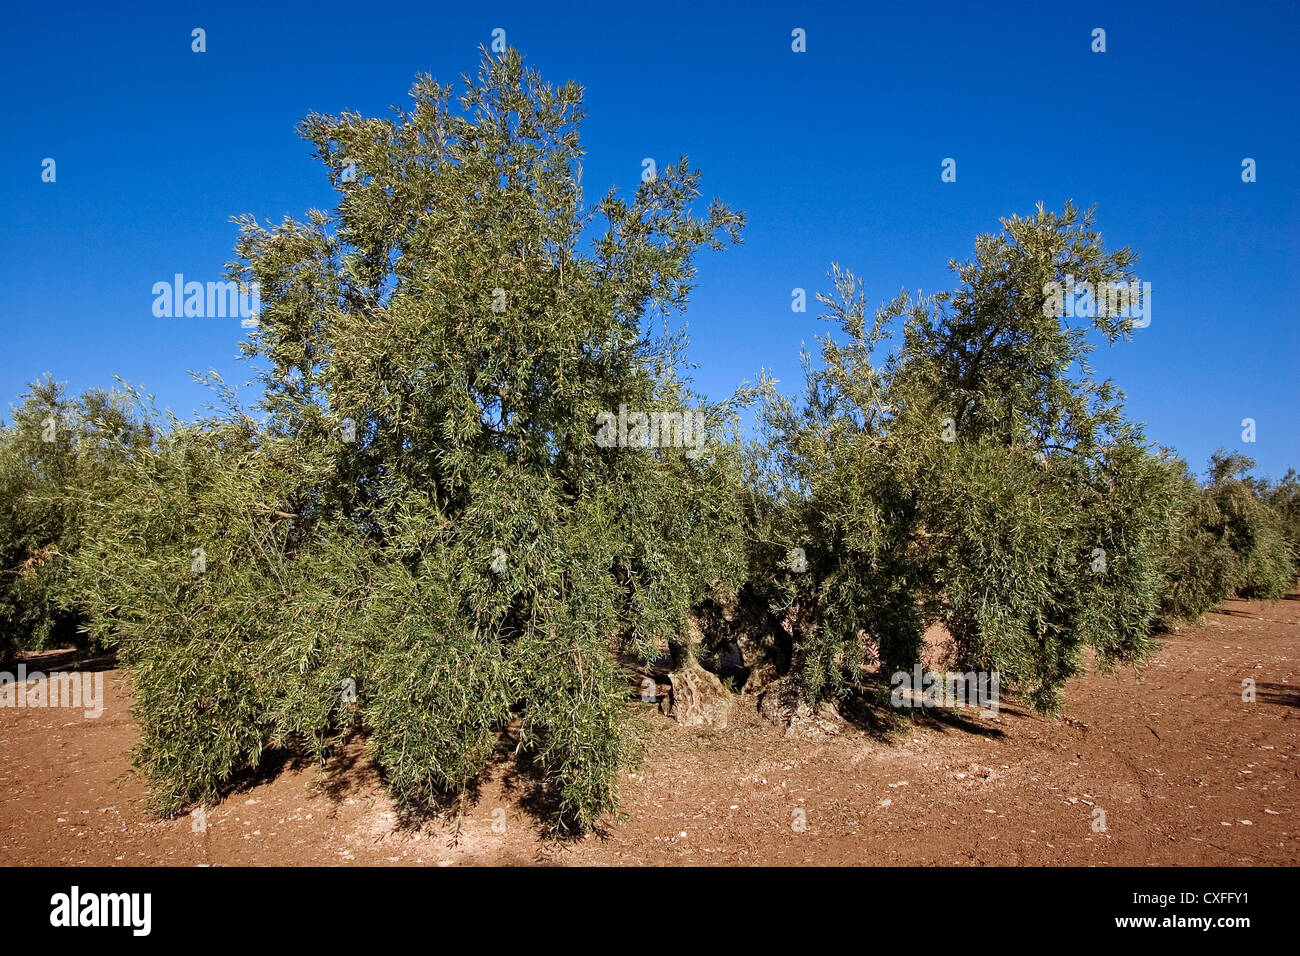 Olive Grove Antequera malaga andalousie espagne campo de olivos en la comarca de Antequera malaga andalousie espagne Banque D'Images